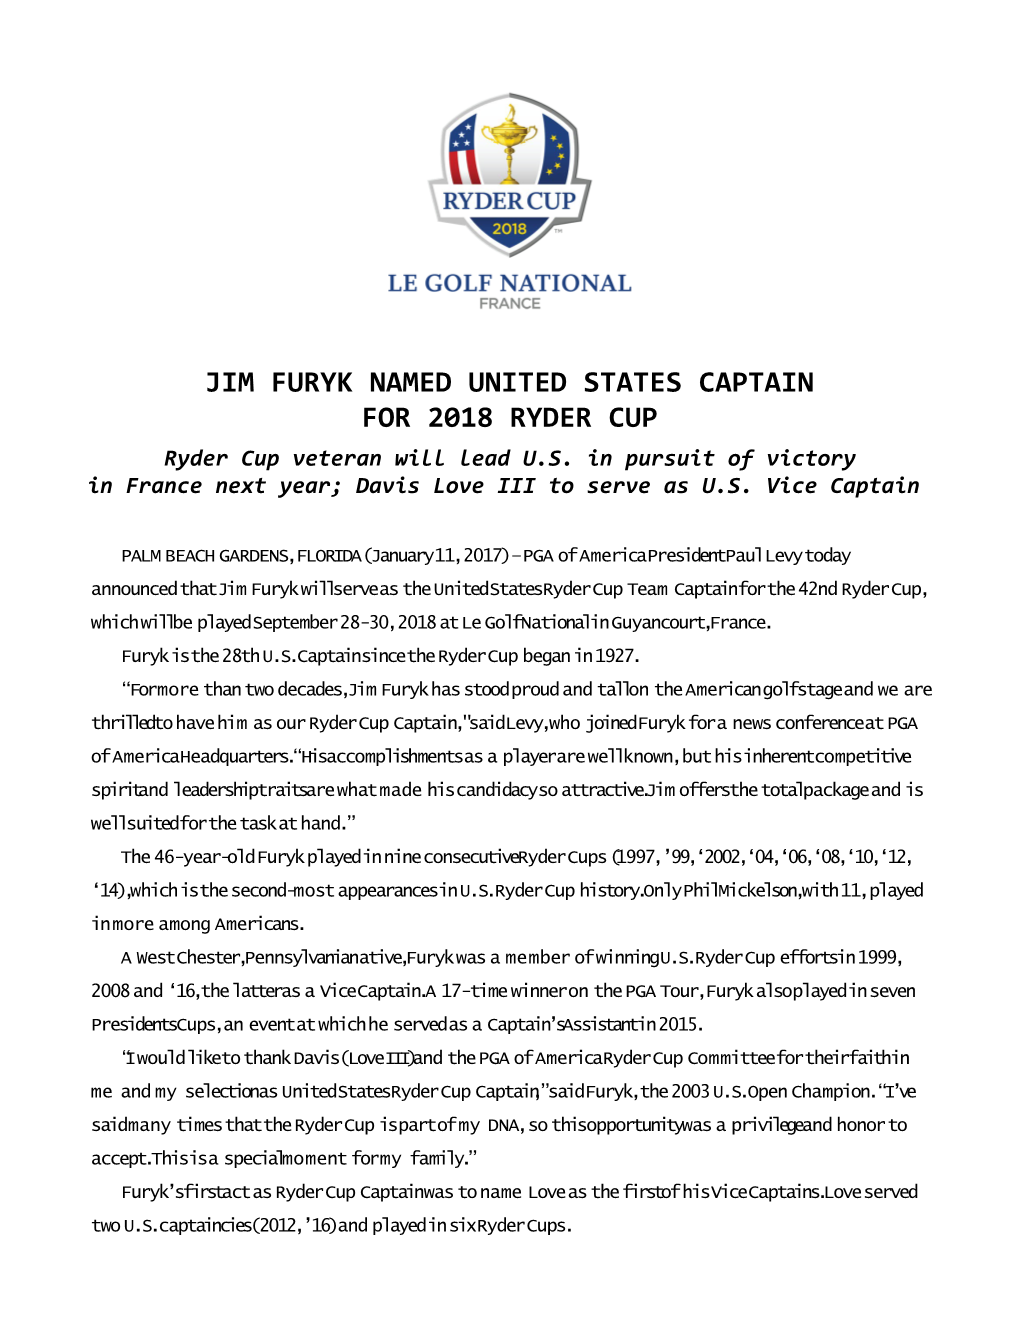 Jim Furyk Named United States Captain